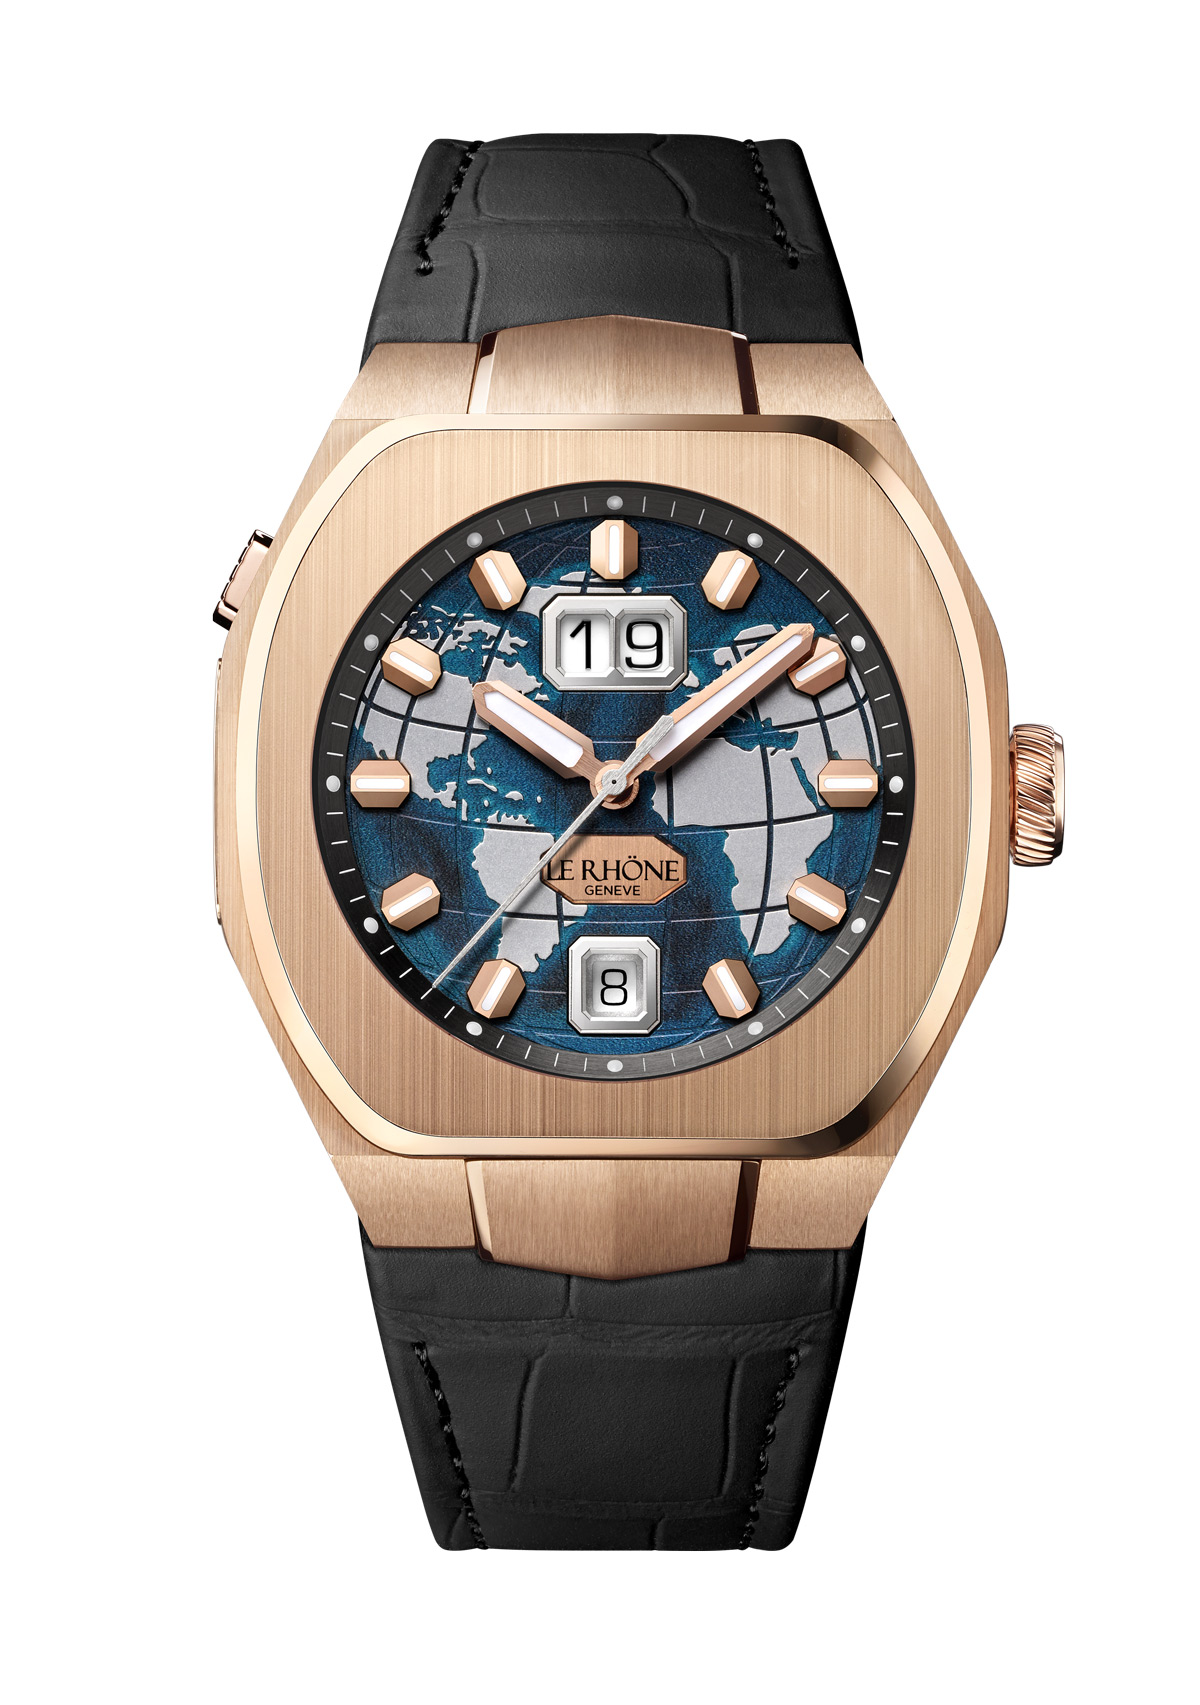 voyager-le-rhone-watch-H6PG052-1-A99D